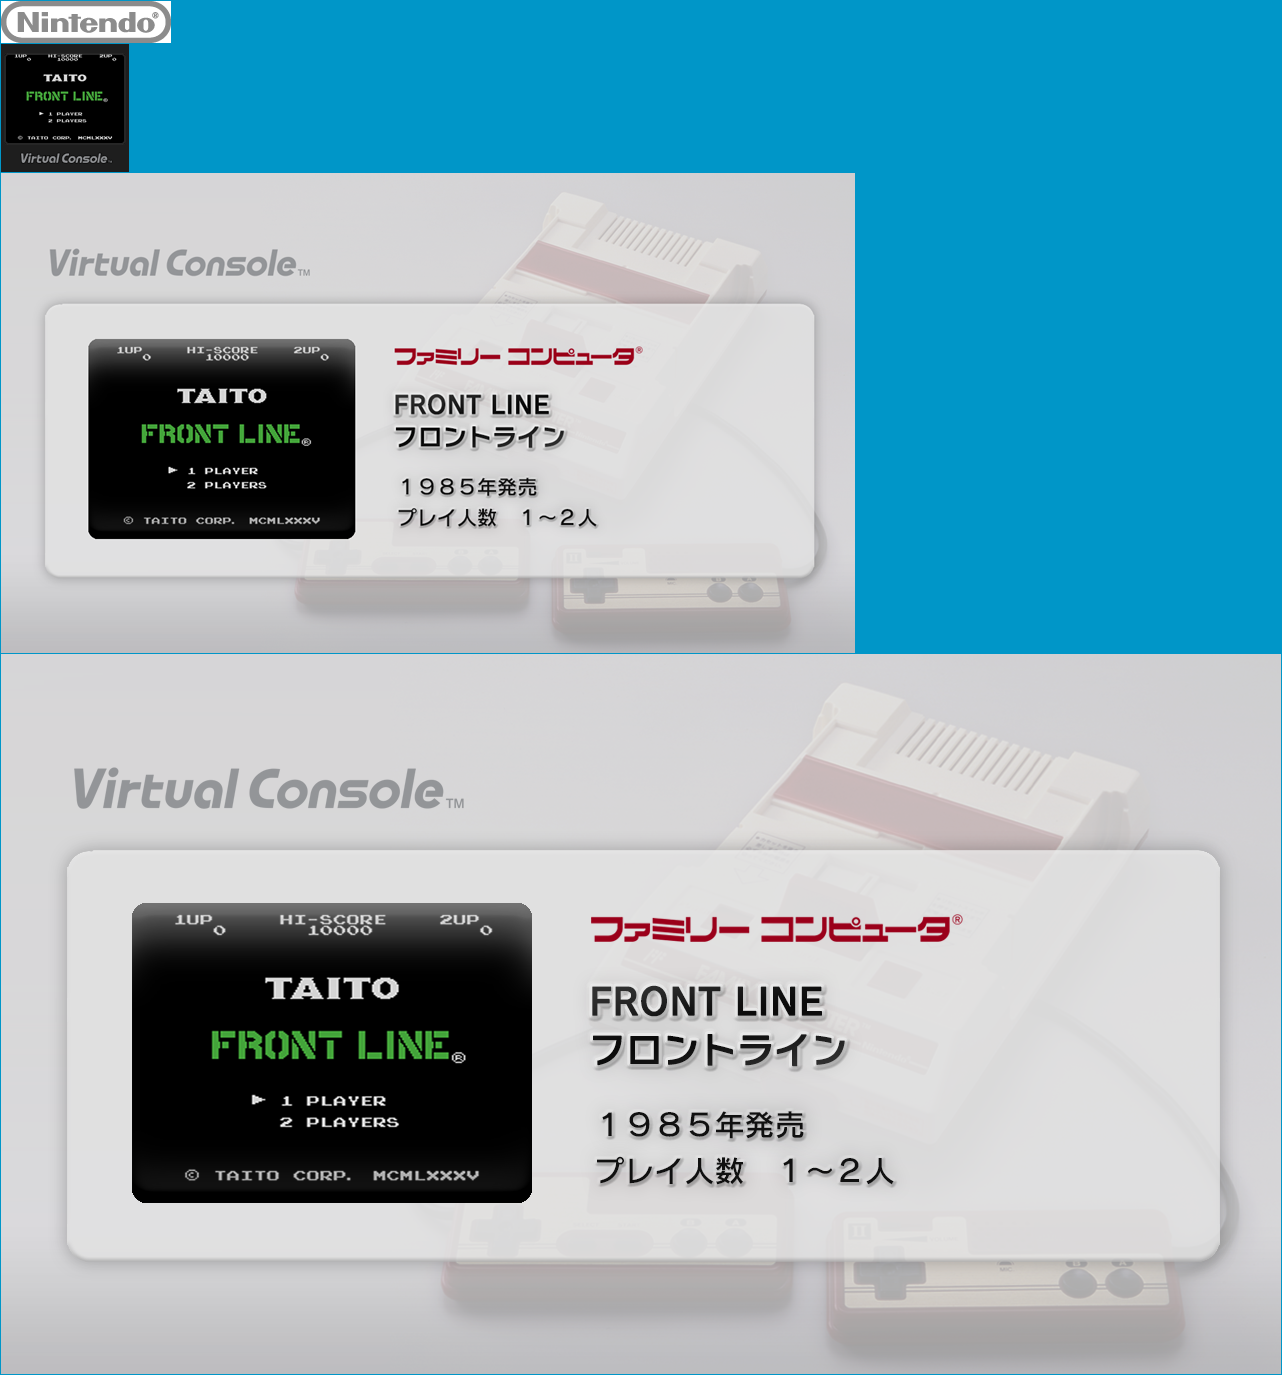 Virtual Console - FRONT LINE